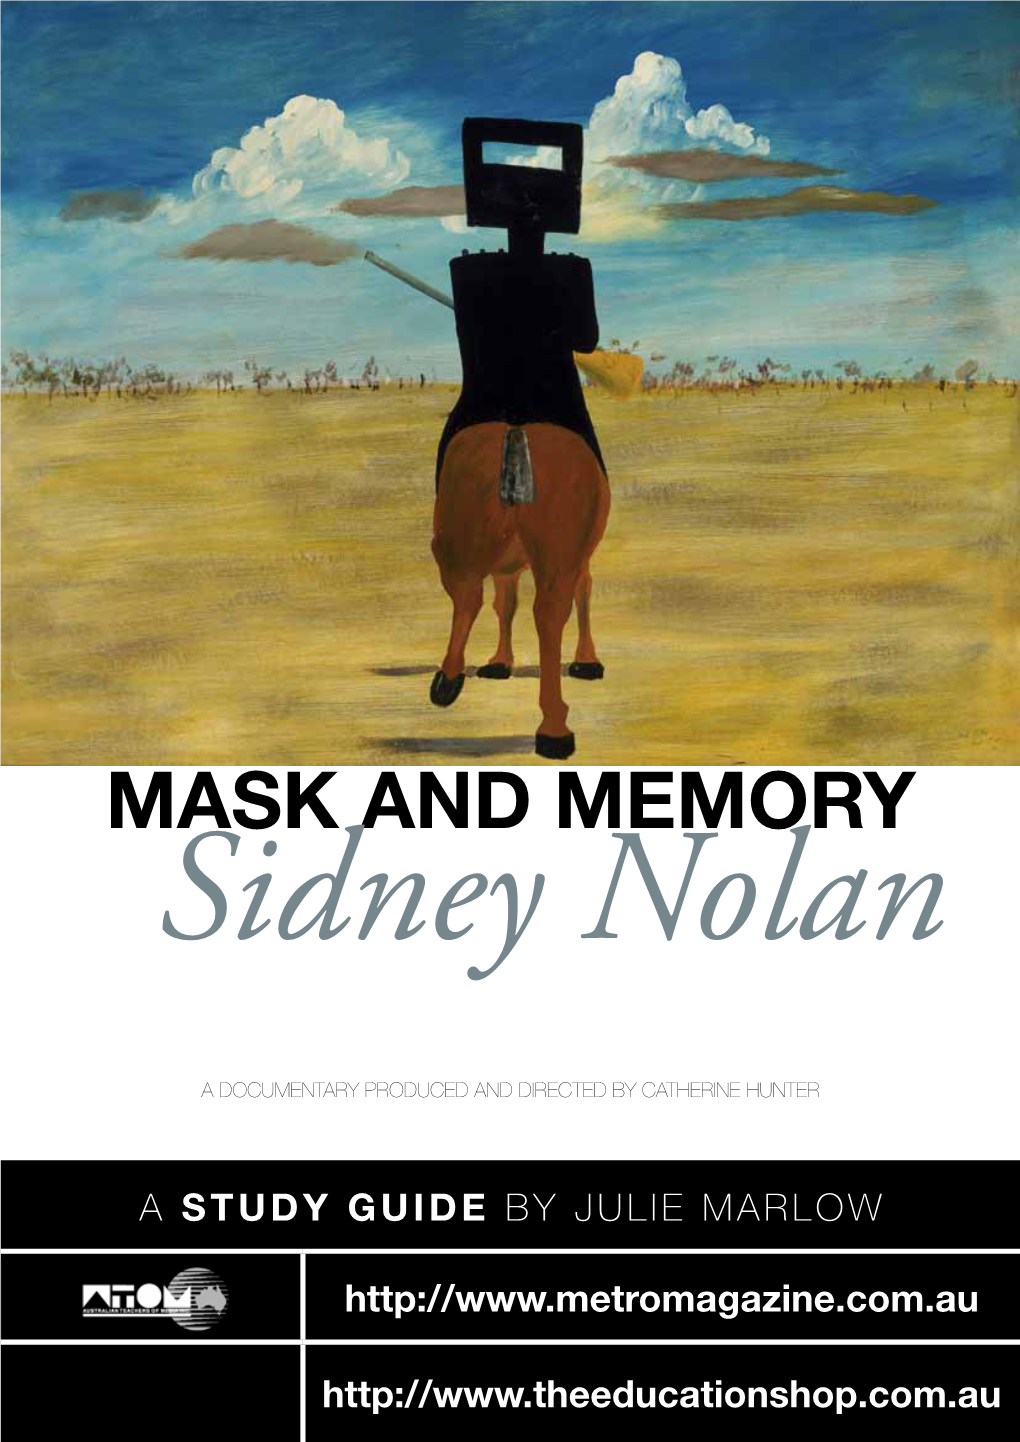 MASK and MEMORY Sidney Nolan